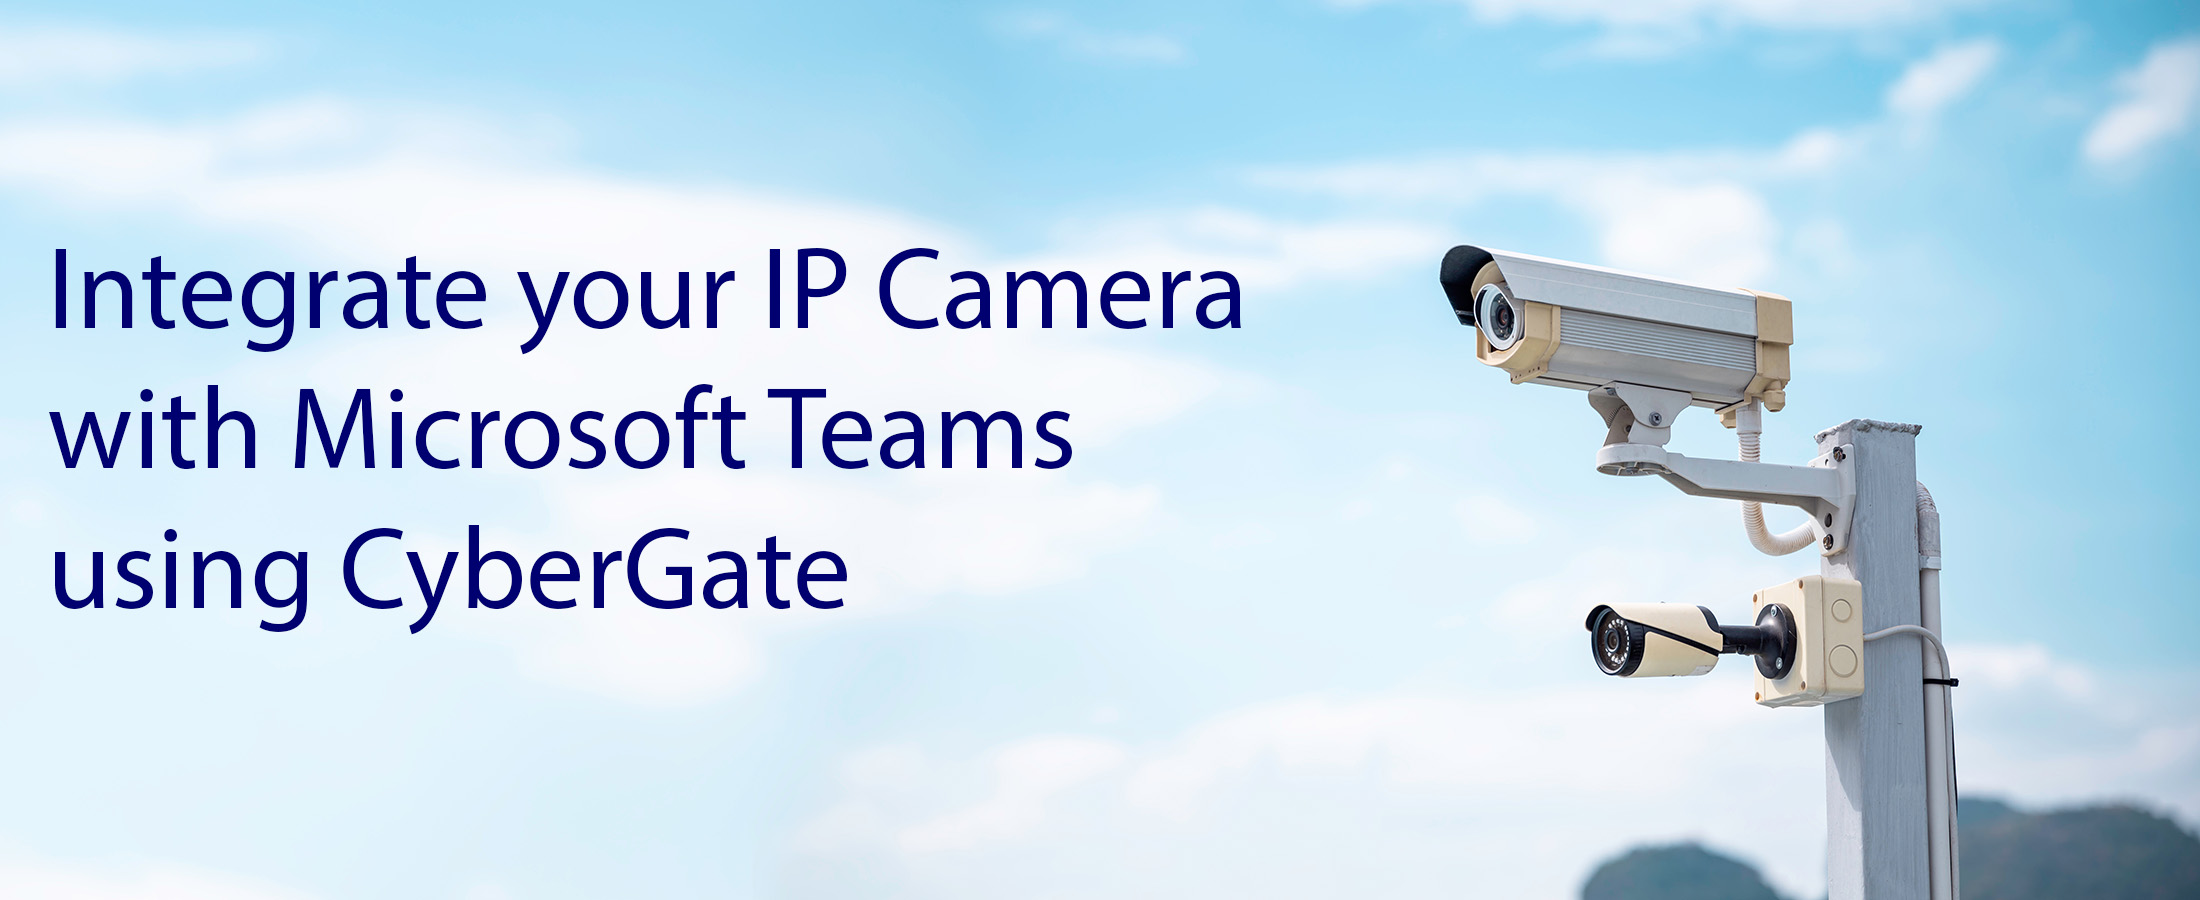 Integrate IP camera with Microsoft Teams